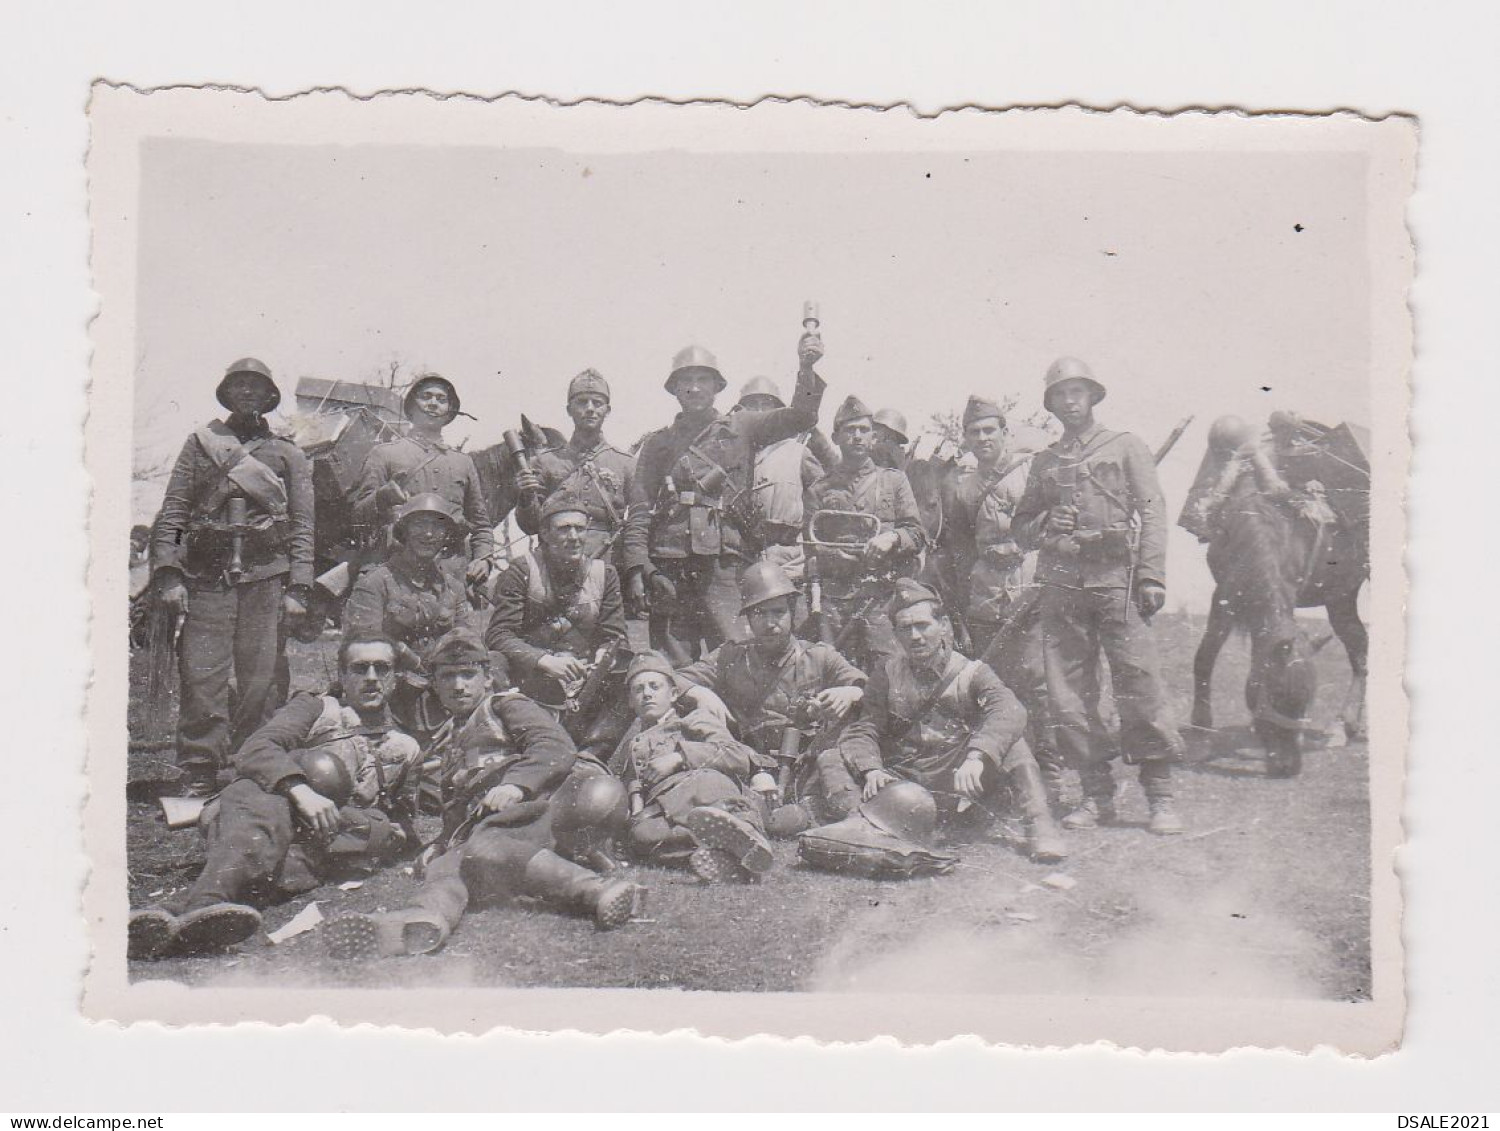 Ww2 Bulgaria Bulgarian Military Soldiers Heavy Armed, Rifles, Helmets, Field Vintage Orig Photo 8.4x6cm. (59710) - Guerre, Militaire